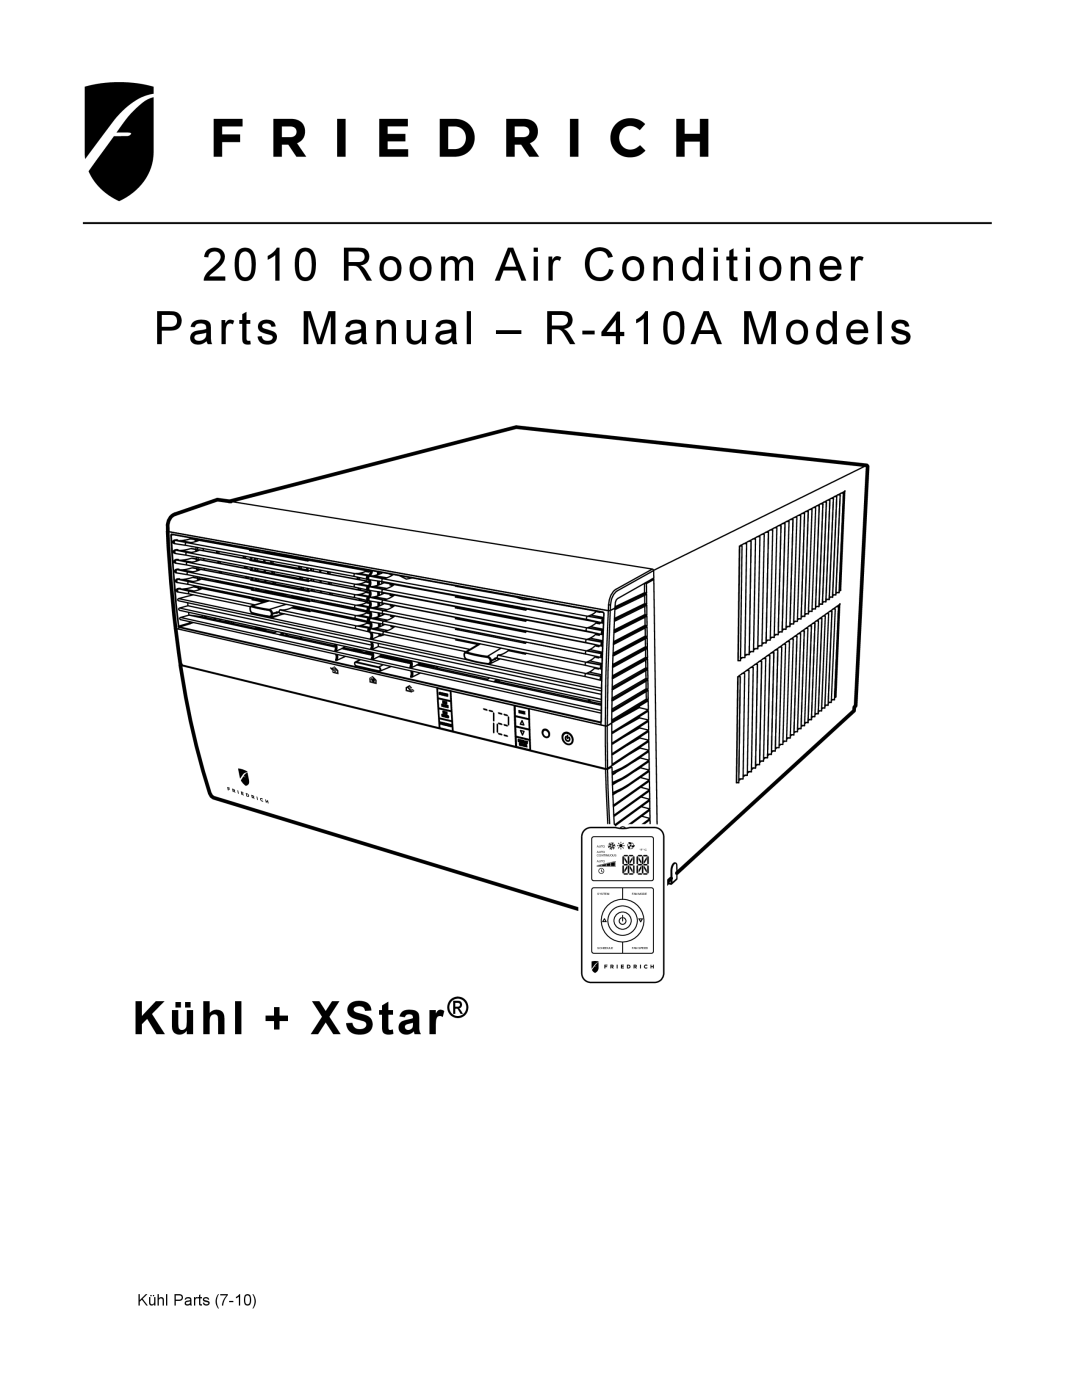 Friedrich manual Room Air Conditioner, Parts Manual - R-410AModels, Kühl + XStar, Kühl Parts, Auto Auto Continuous 